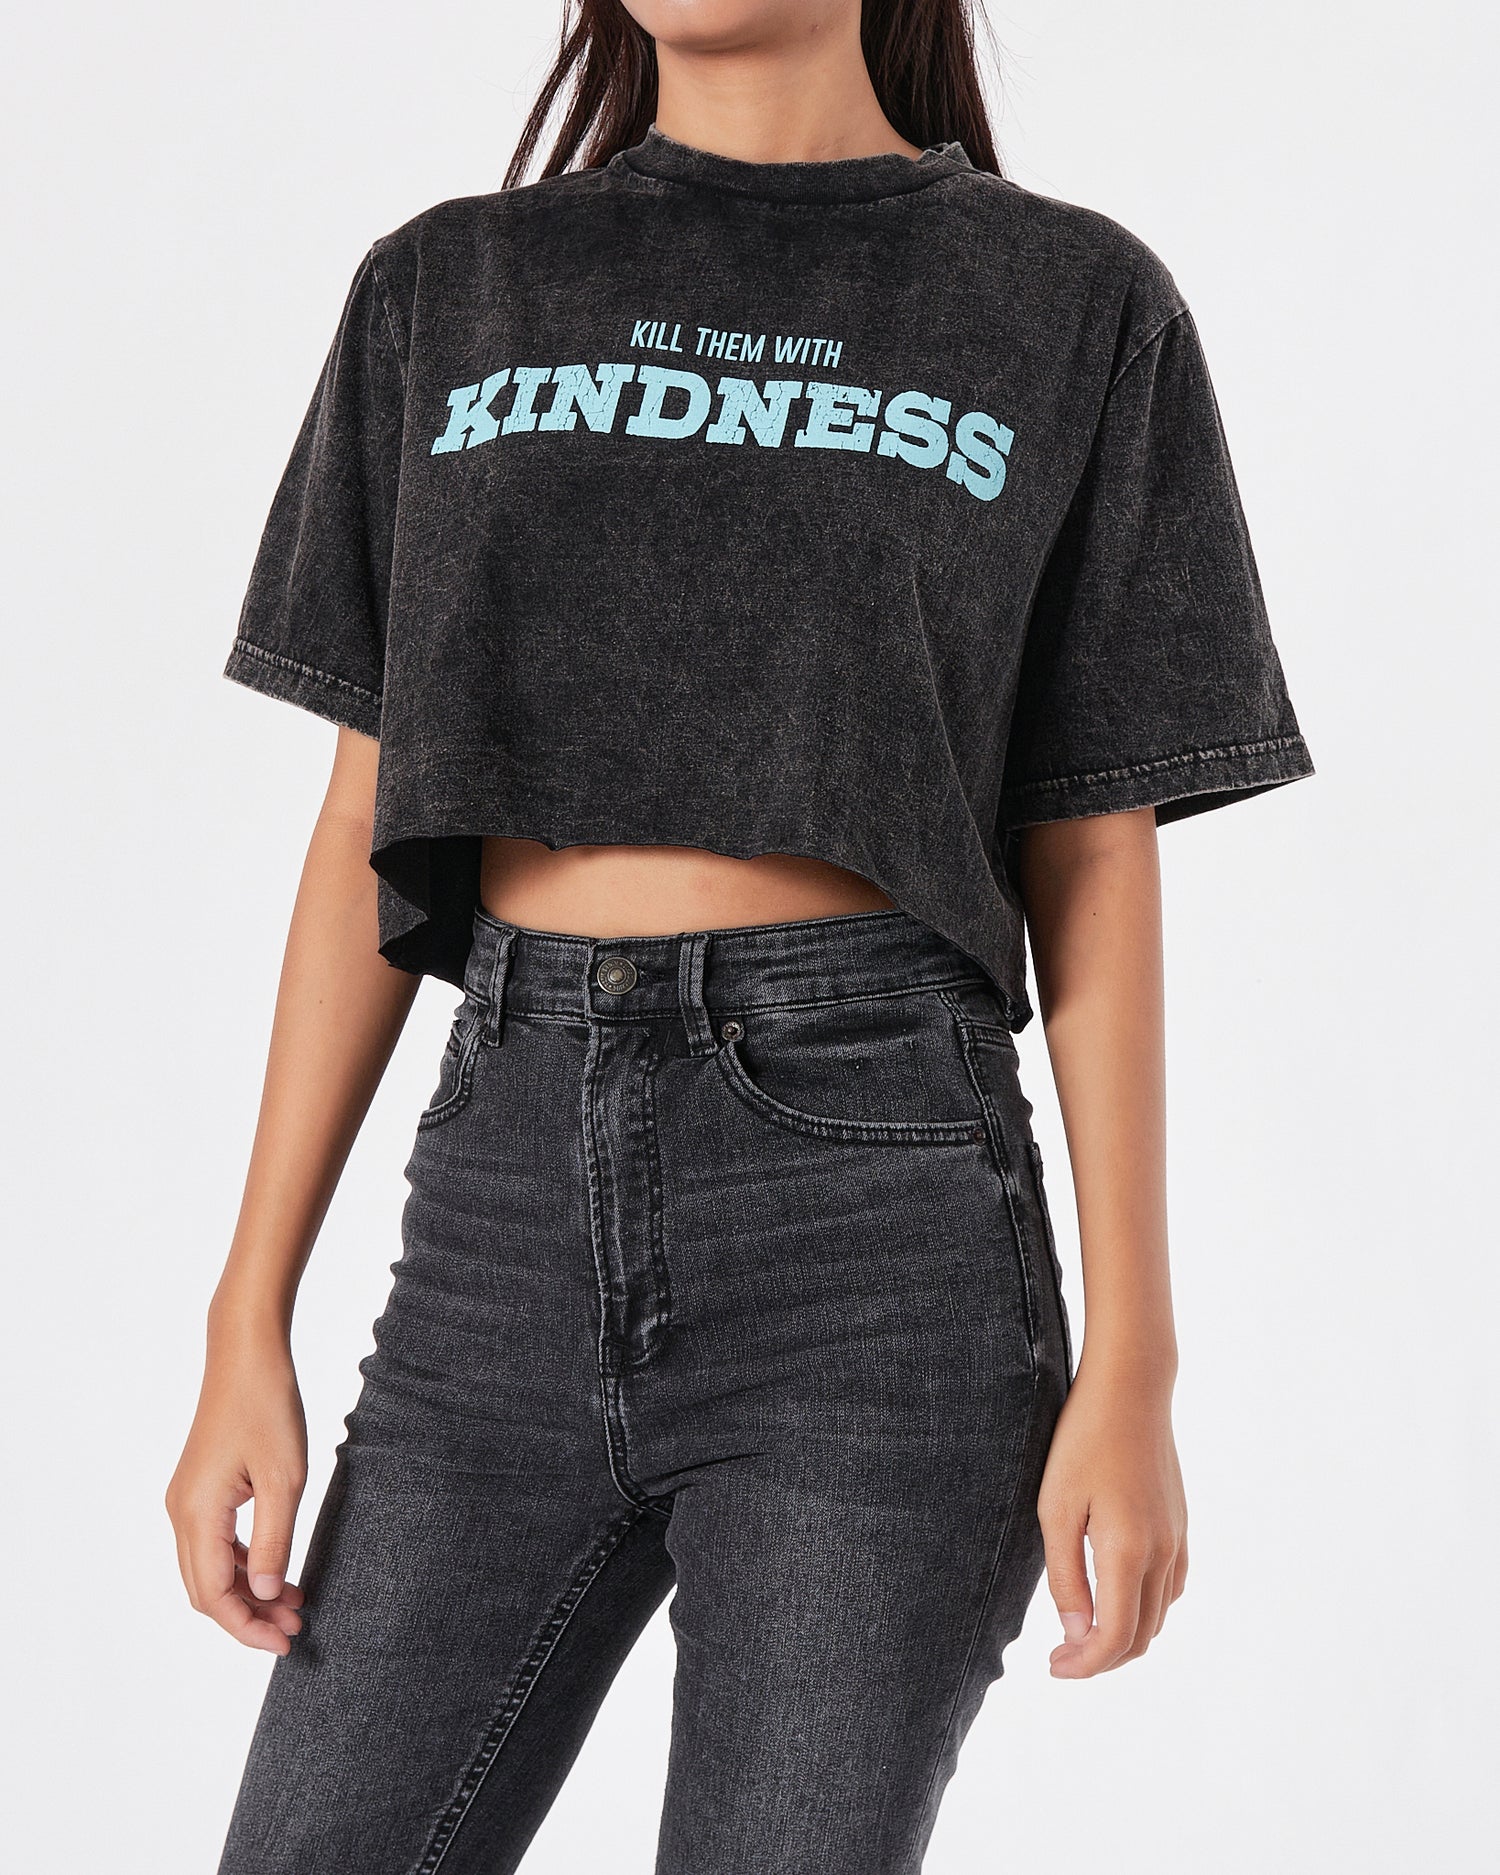 Green Kindness Lady Black T-Shirt Crop Top 10.90